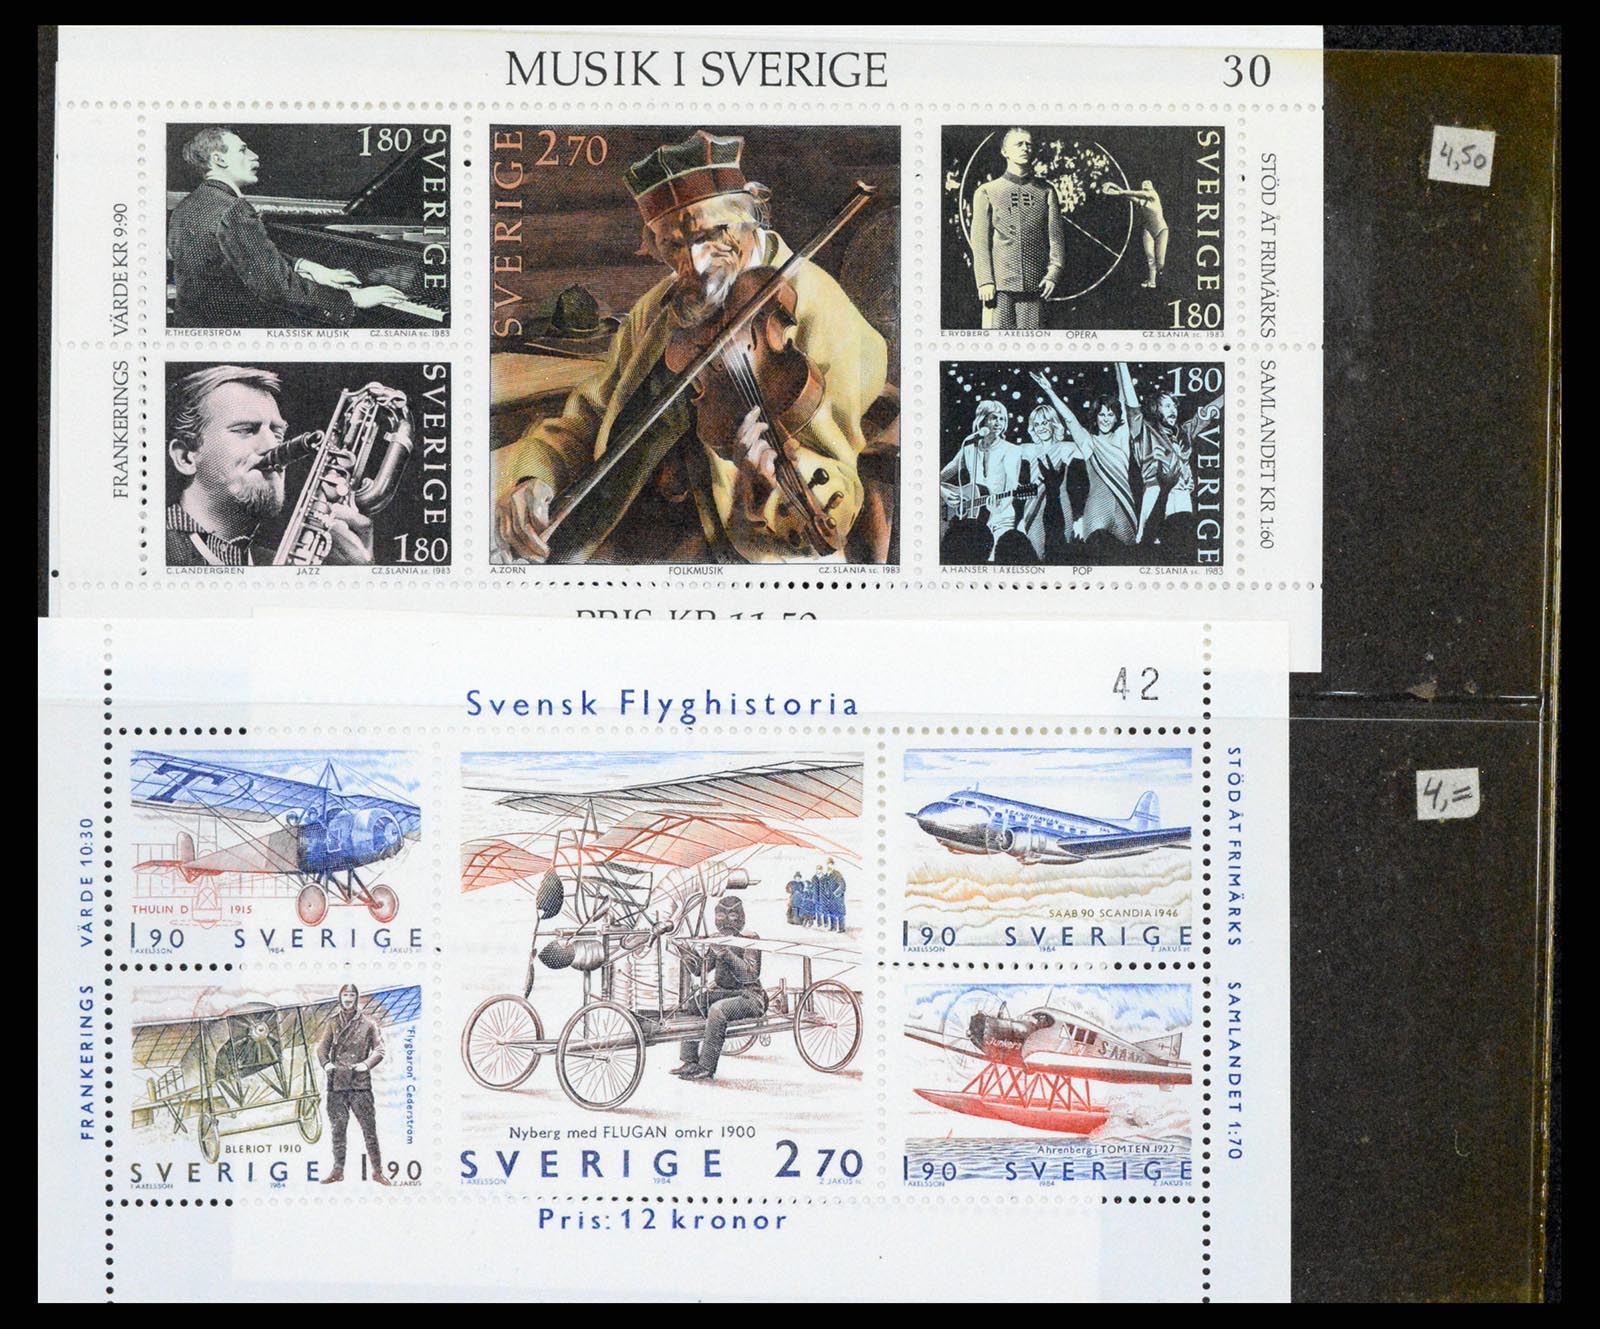 37341 003 - Stamp collection 37341 Sweden stamp booklets.